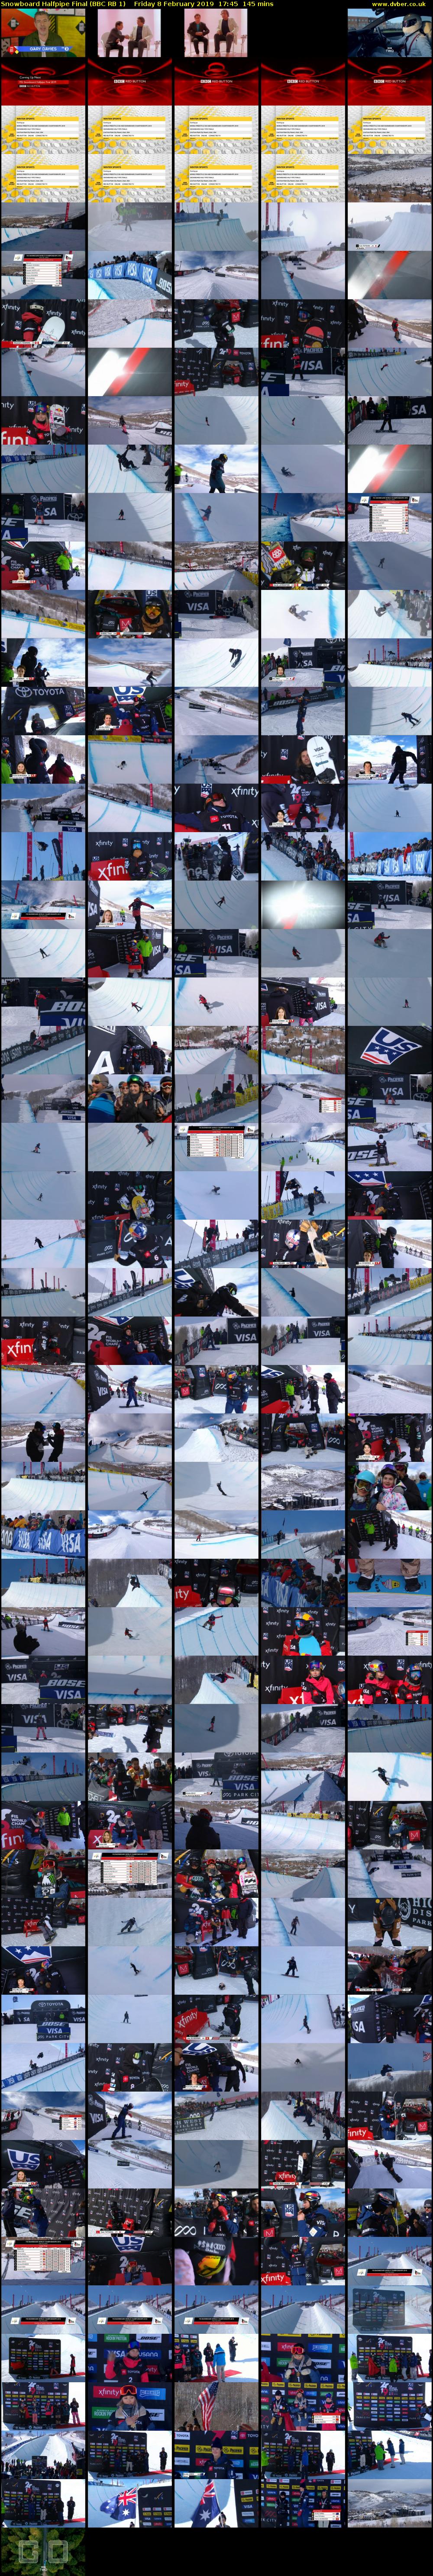 Snowboard Halfpipe Final (BBC RB 1) Friday 8 February 2019 17:45 - 20:10